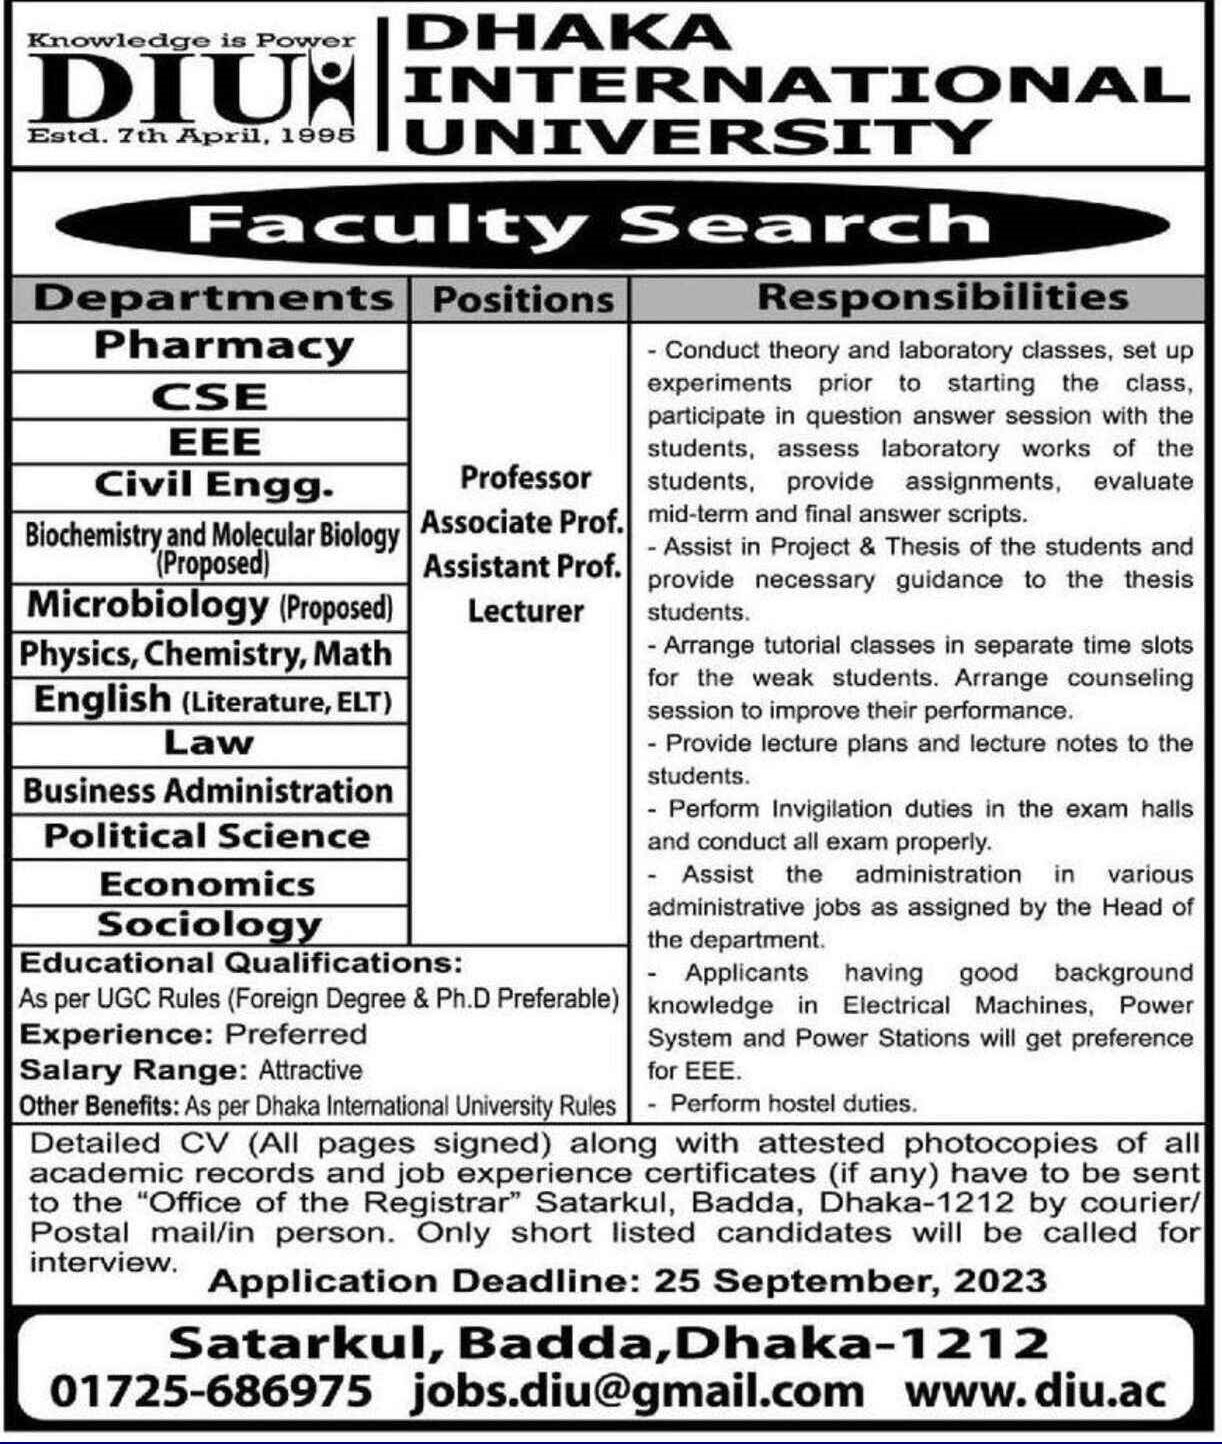 Dhaka International University Job Circular